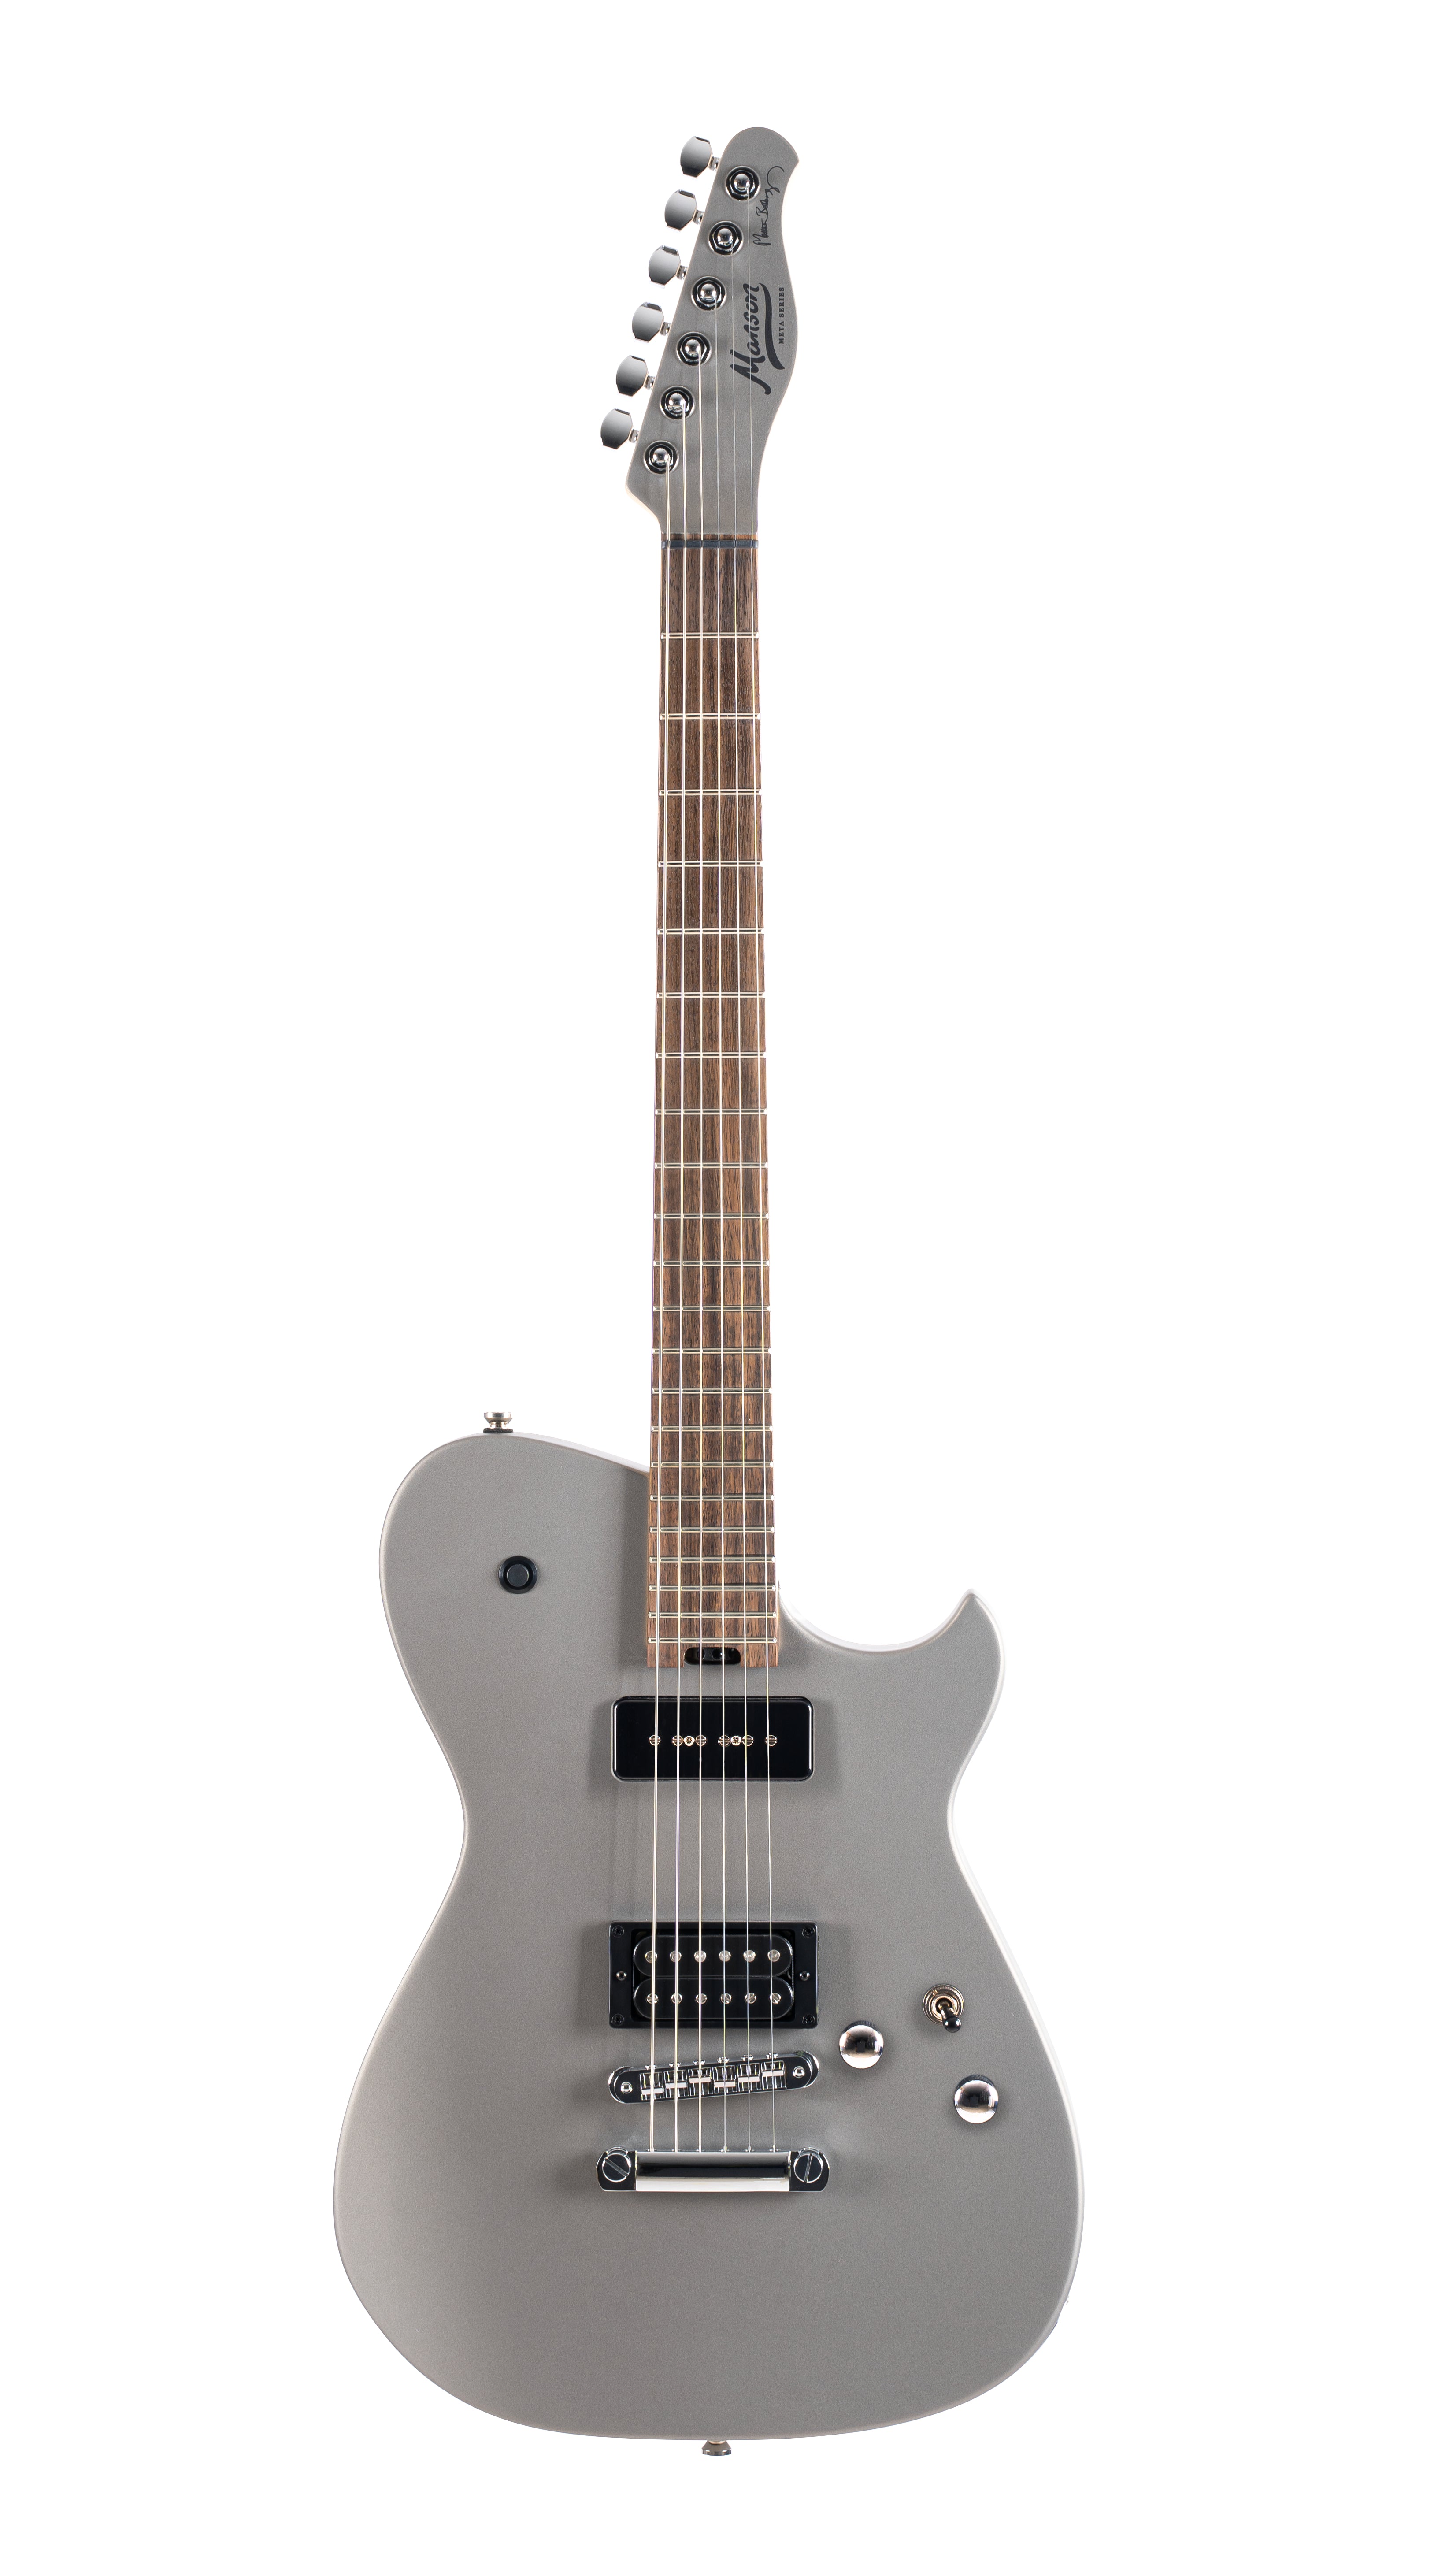 Manson Meta Series MBM-2P Starlight Silver, Electric Guitar for sale at Richards Guitars.